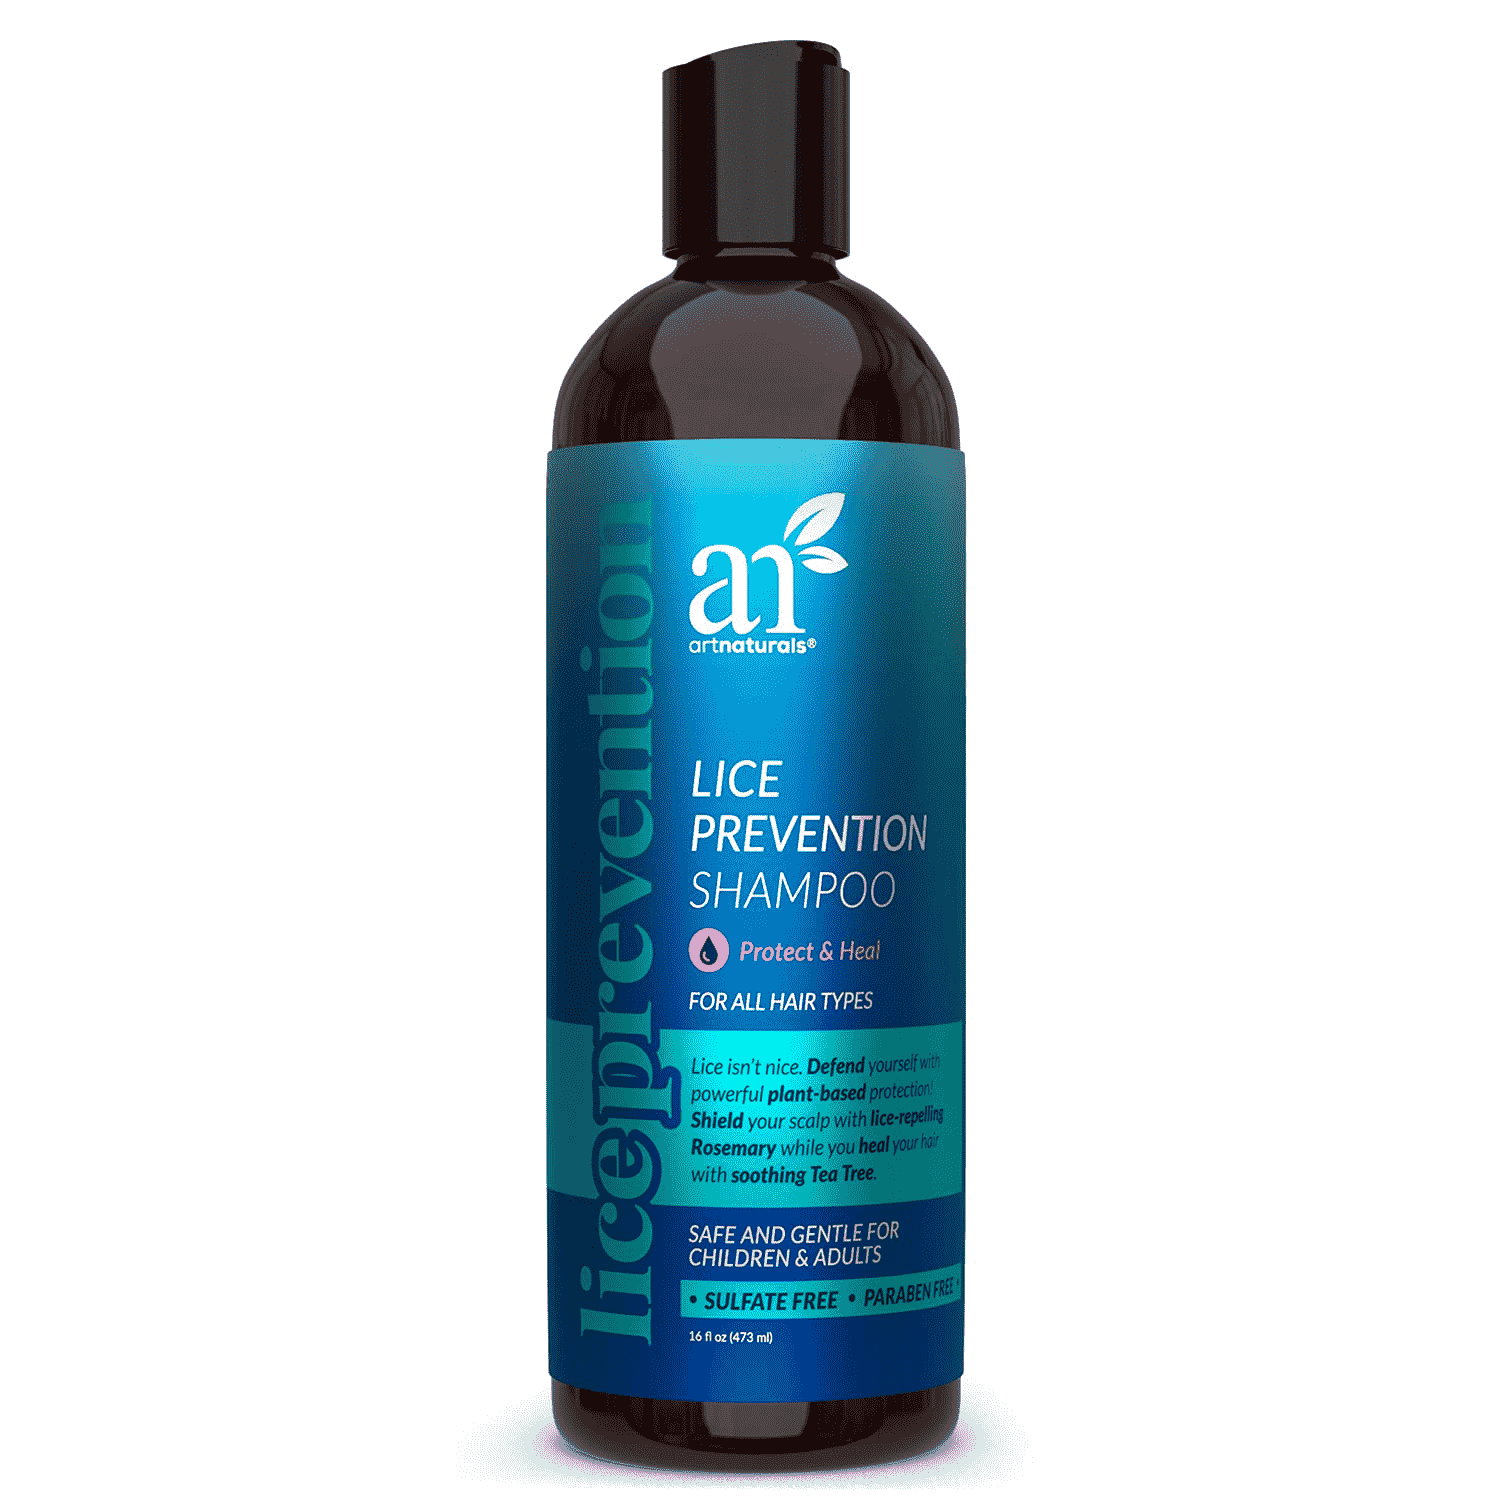 Lice prevention shampoo